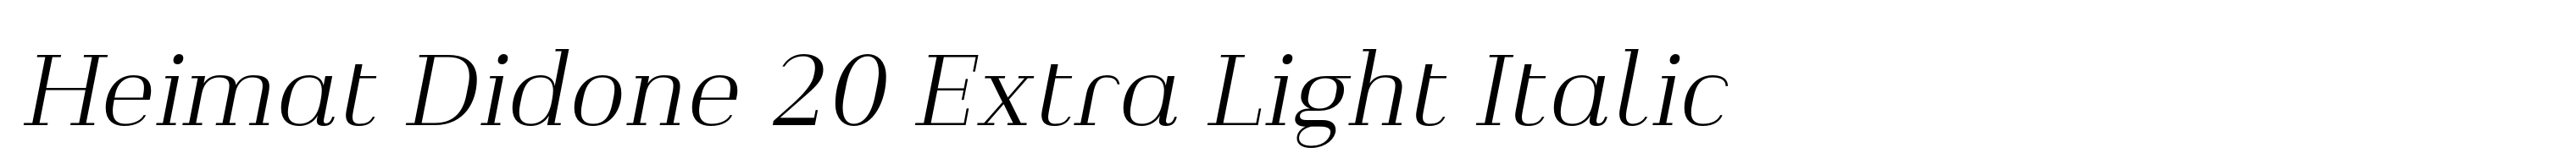 Heimat Didone 20 Extra Light Italic